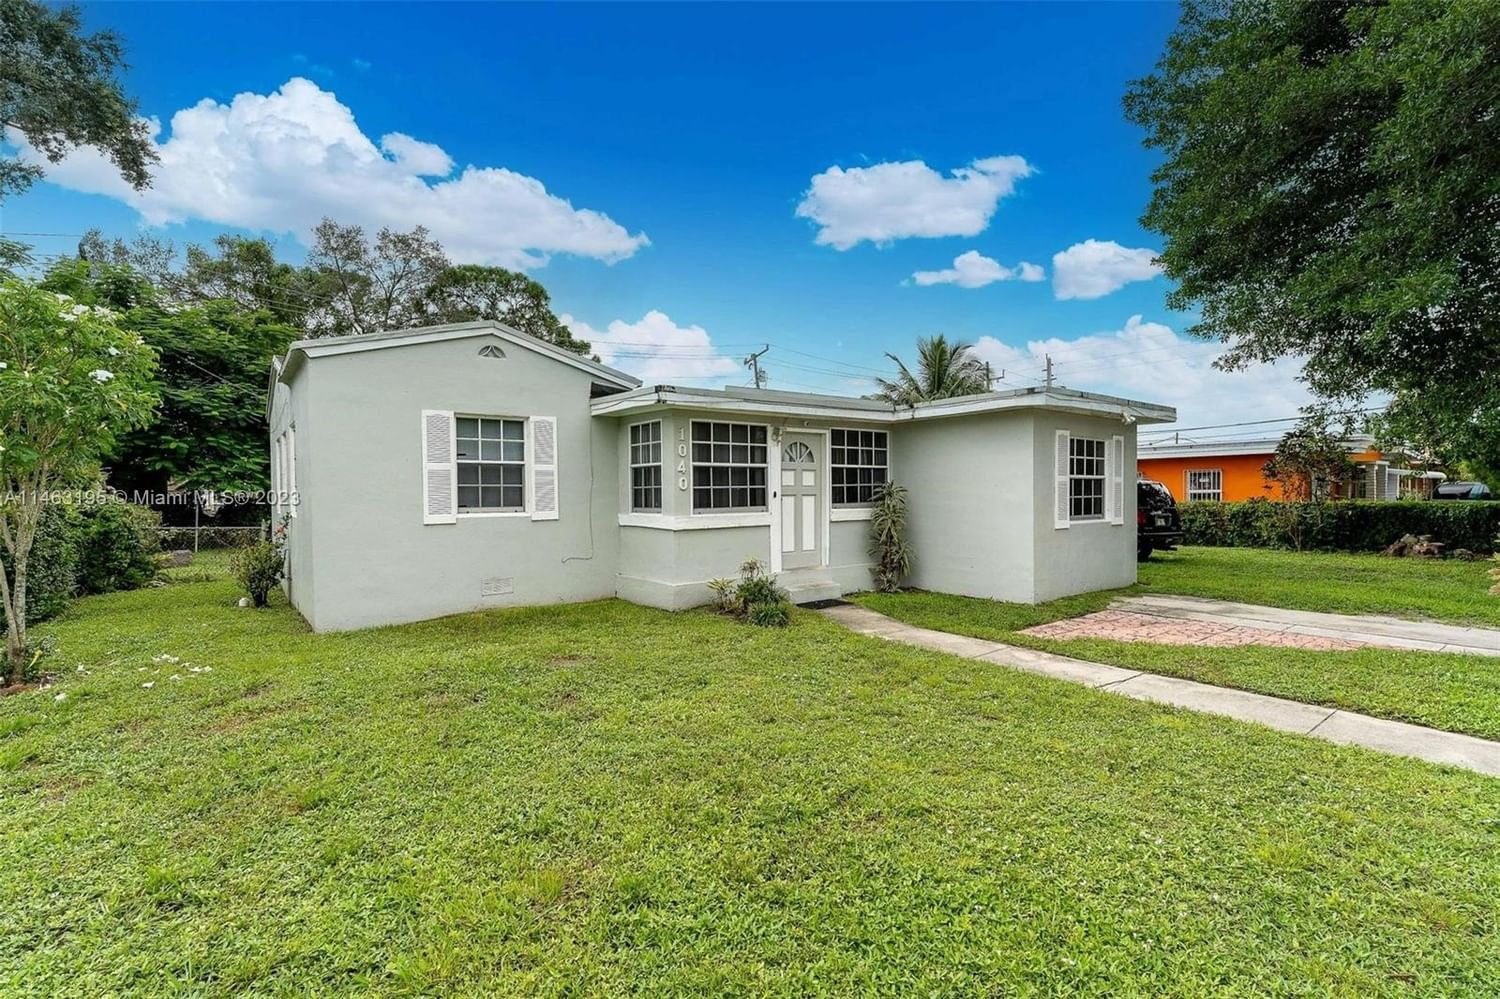 Real estate property located at 1040 Caliph Street, Miami-Dade County, PLAT NO 1 OPA LOCKA, Opa-Locka, FL